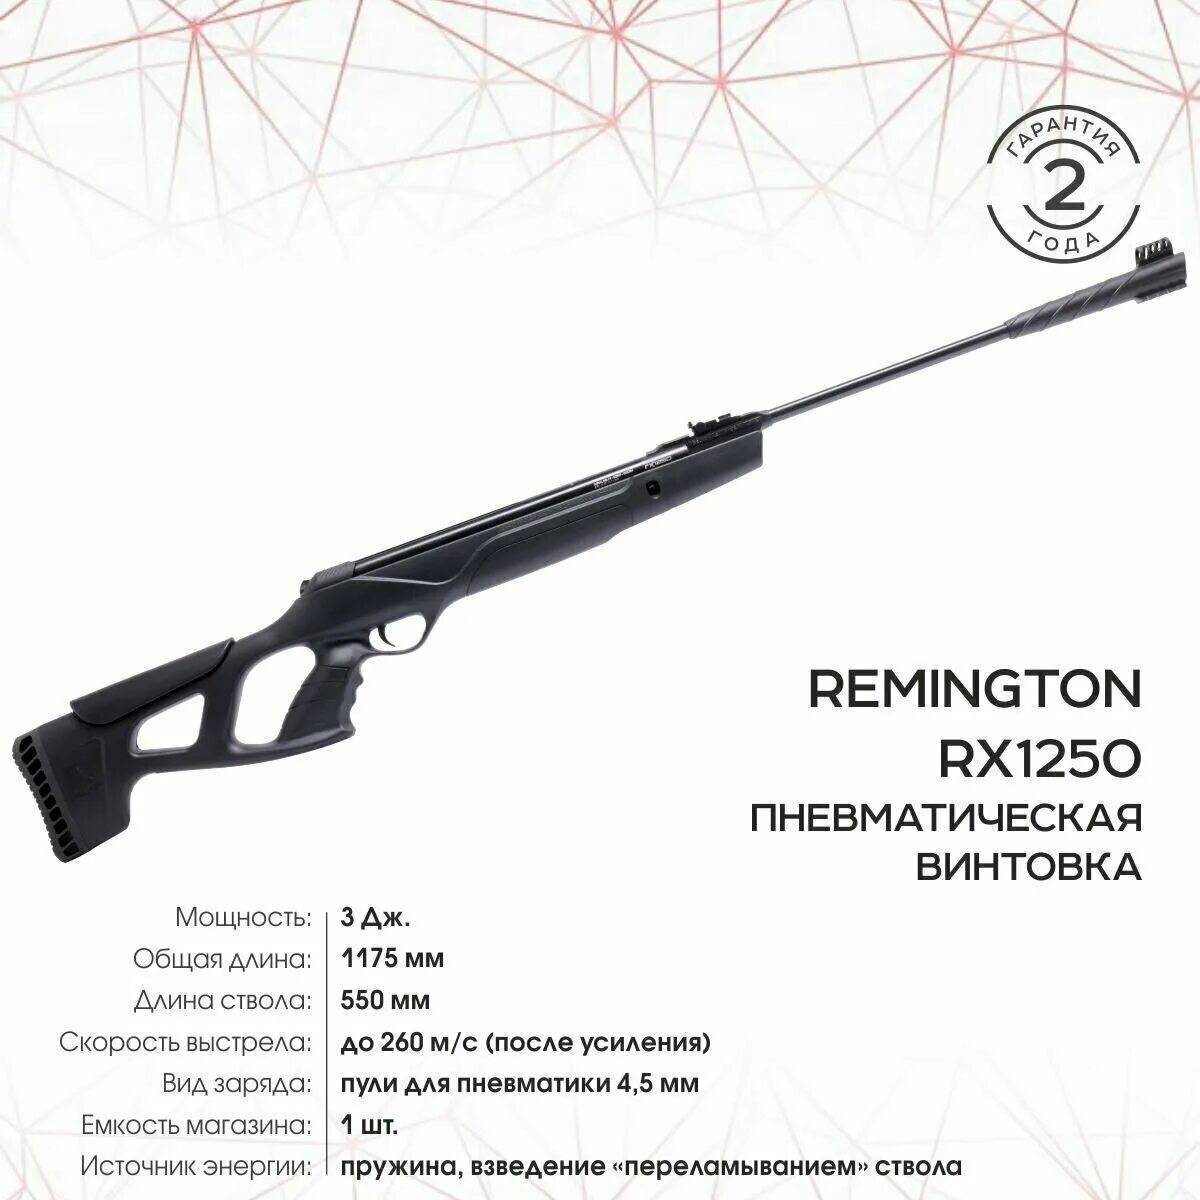 Remington rx1250. Пневматическая винтовка Remington rx1250. Пневматическая винтовка Aselkon Remington rx1250. Пневматическая винтовка Remington rx1250 4.5 мм. Винтовка пневматическая Remington RX-1250 (пластик);.